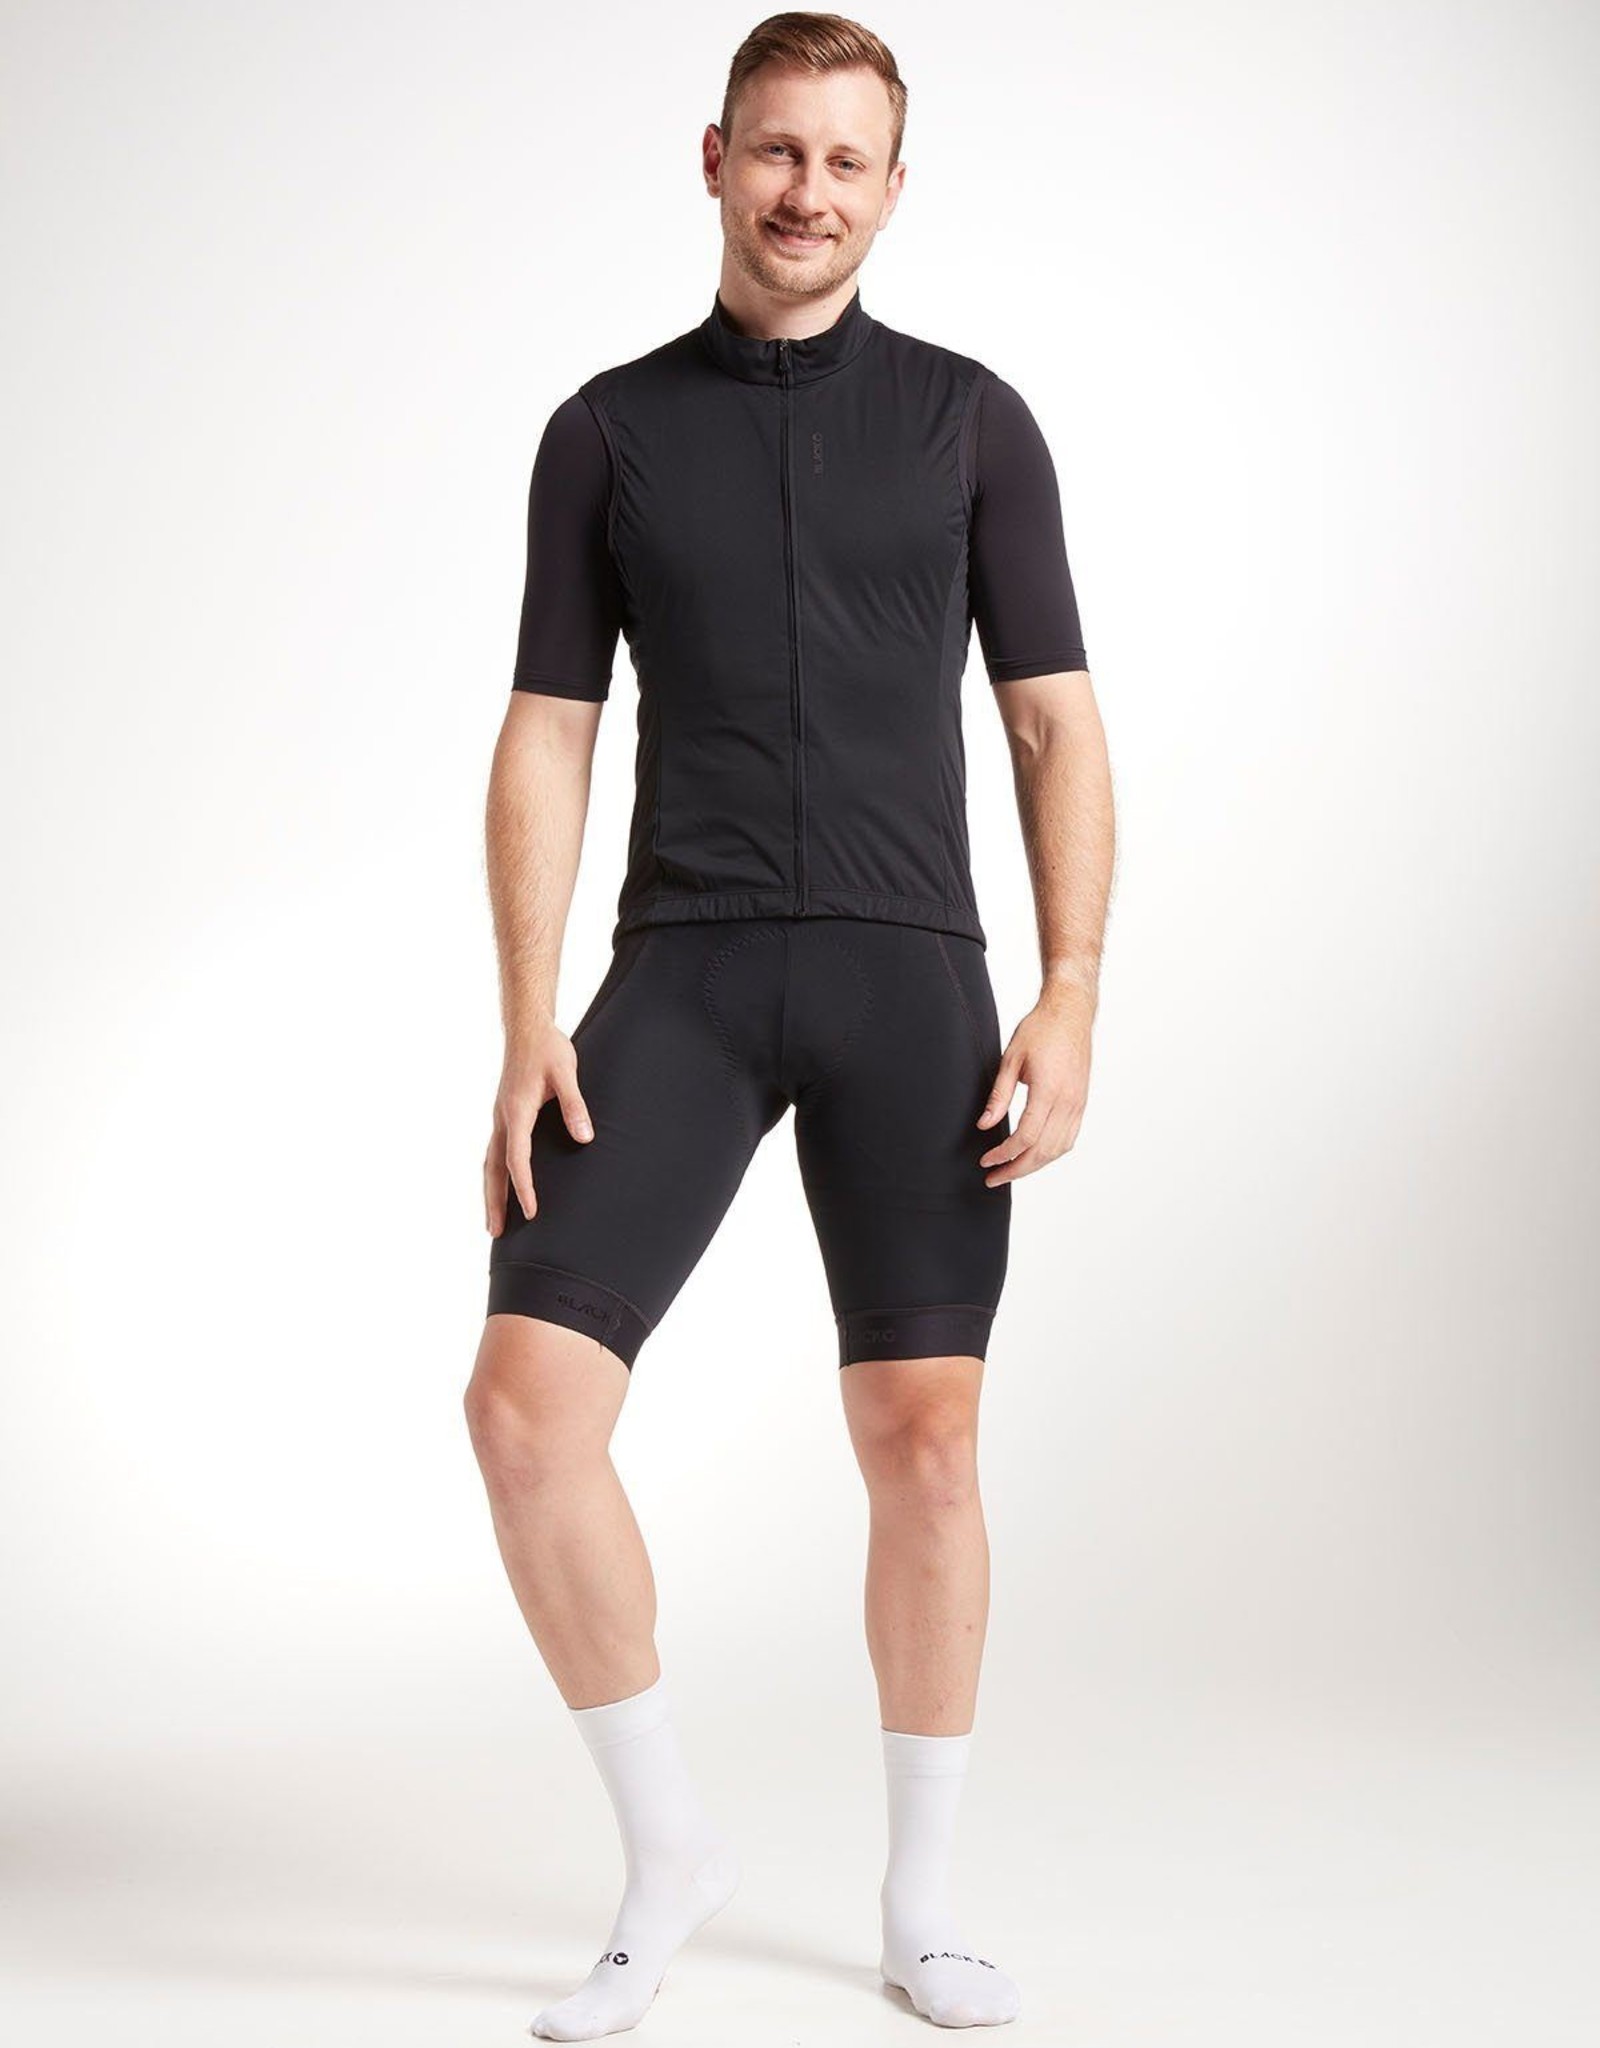 Black Sheep Cycling Men's Essentials TEAM Vest - zwart